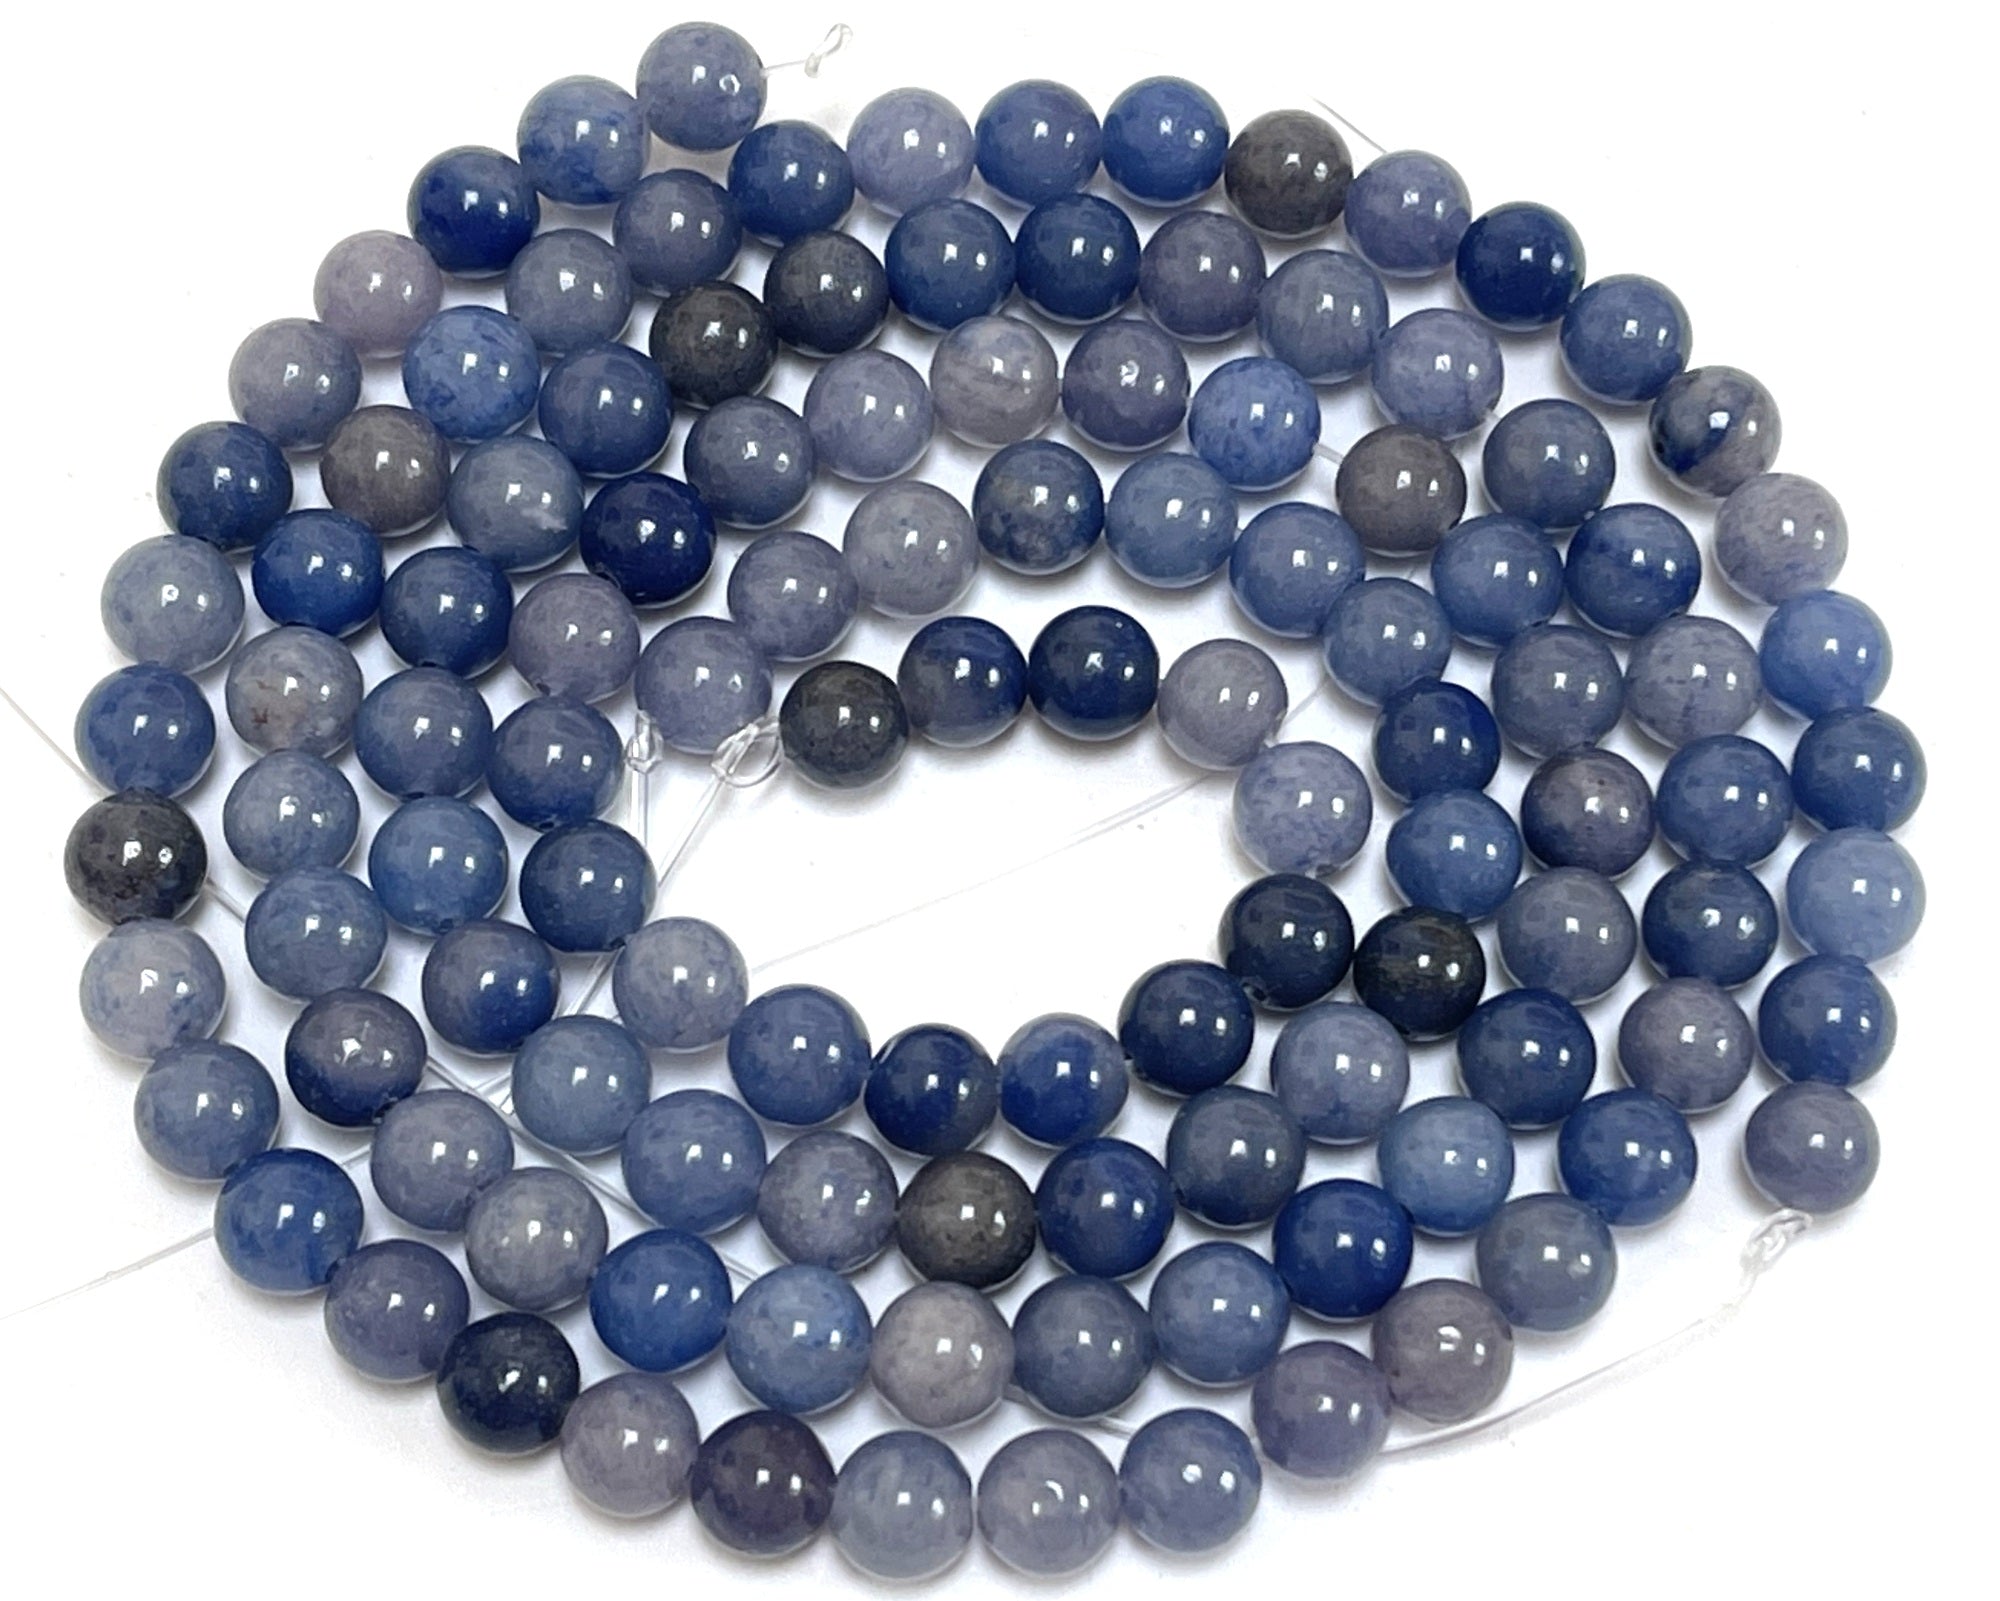 Blue Aventurine 6mm round natural gemstone beads 15" strand